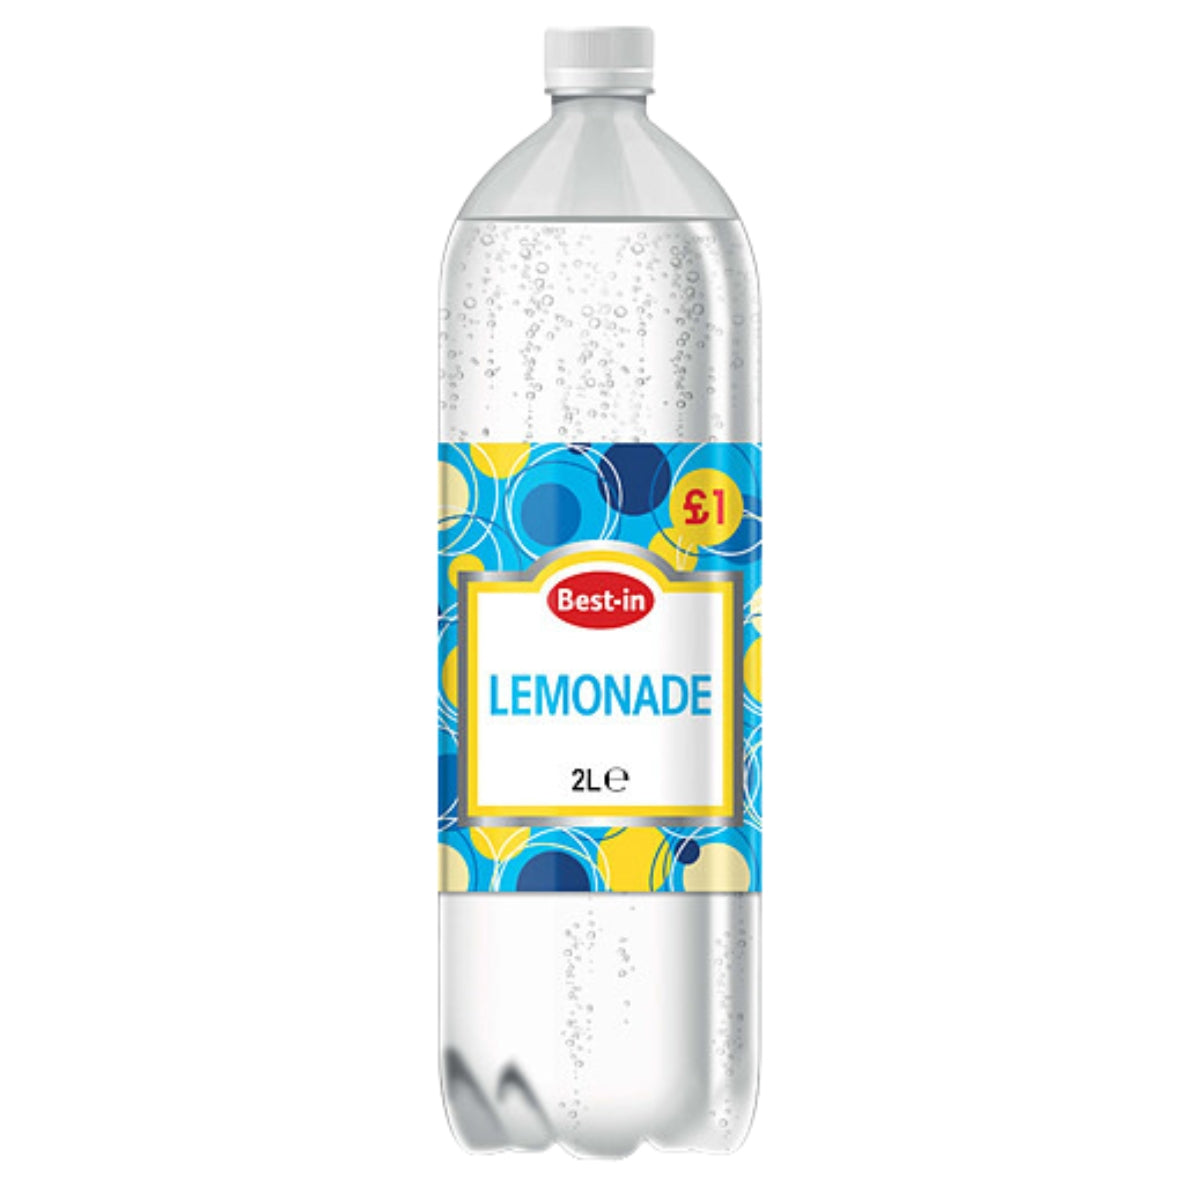 A bottle of Best In - Lemonade - 2 Litre on a white background.